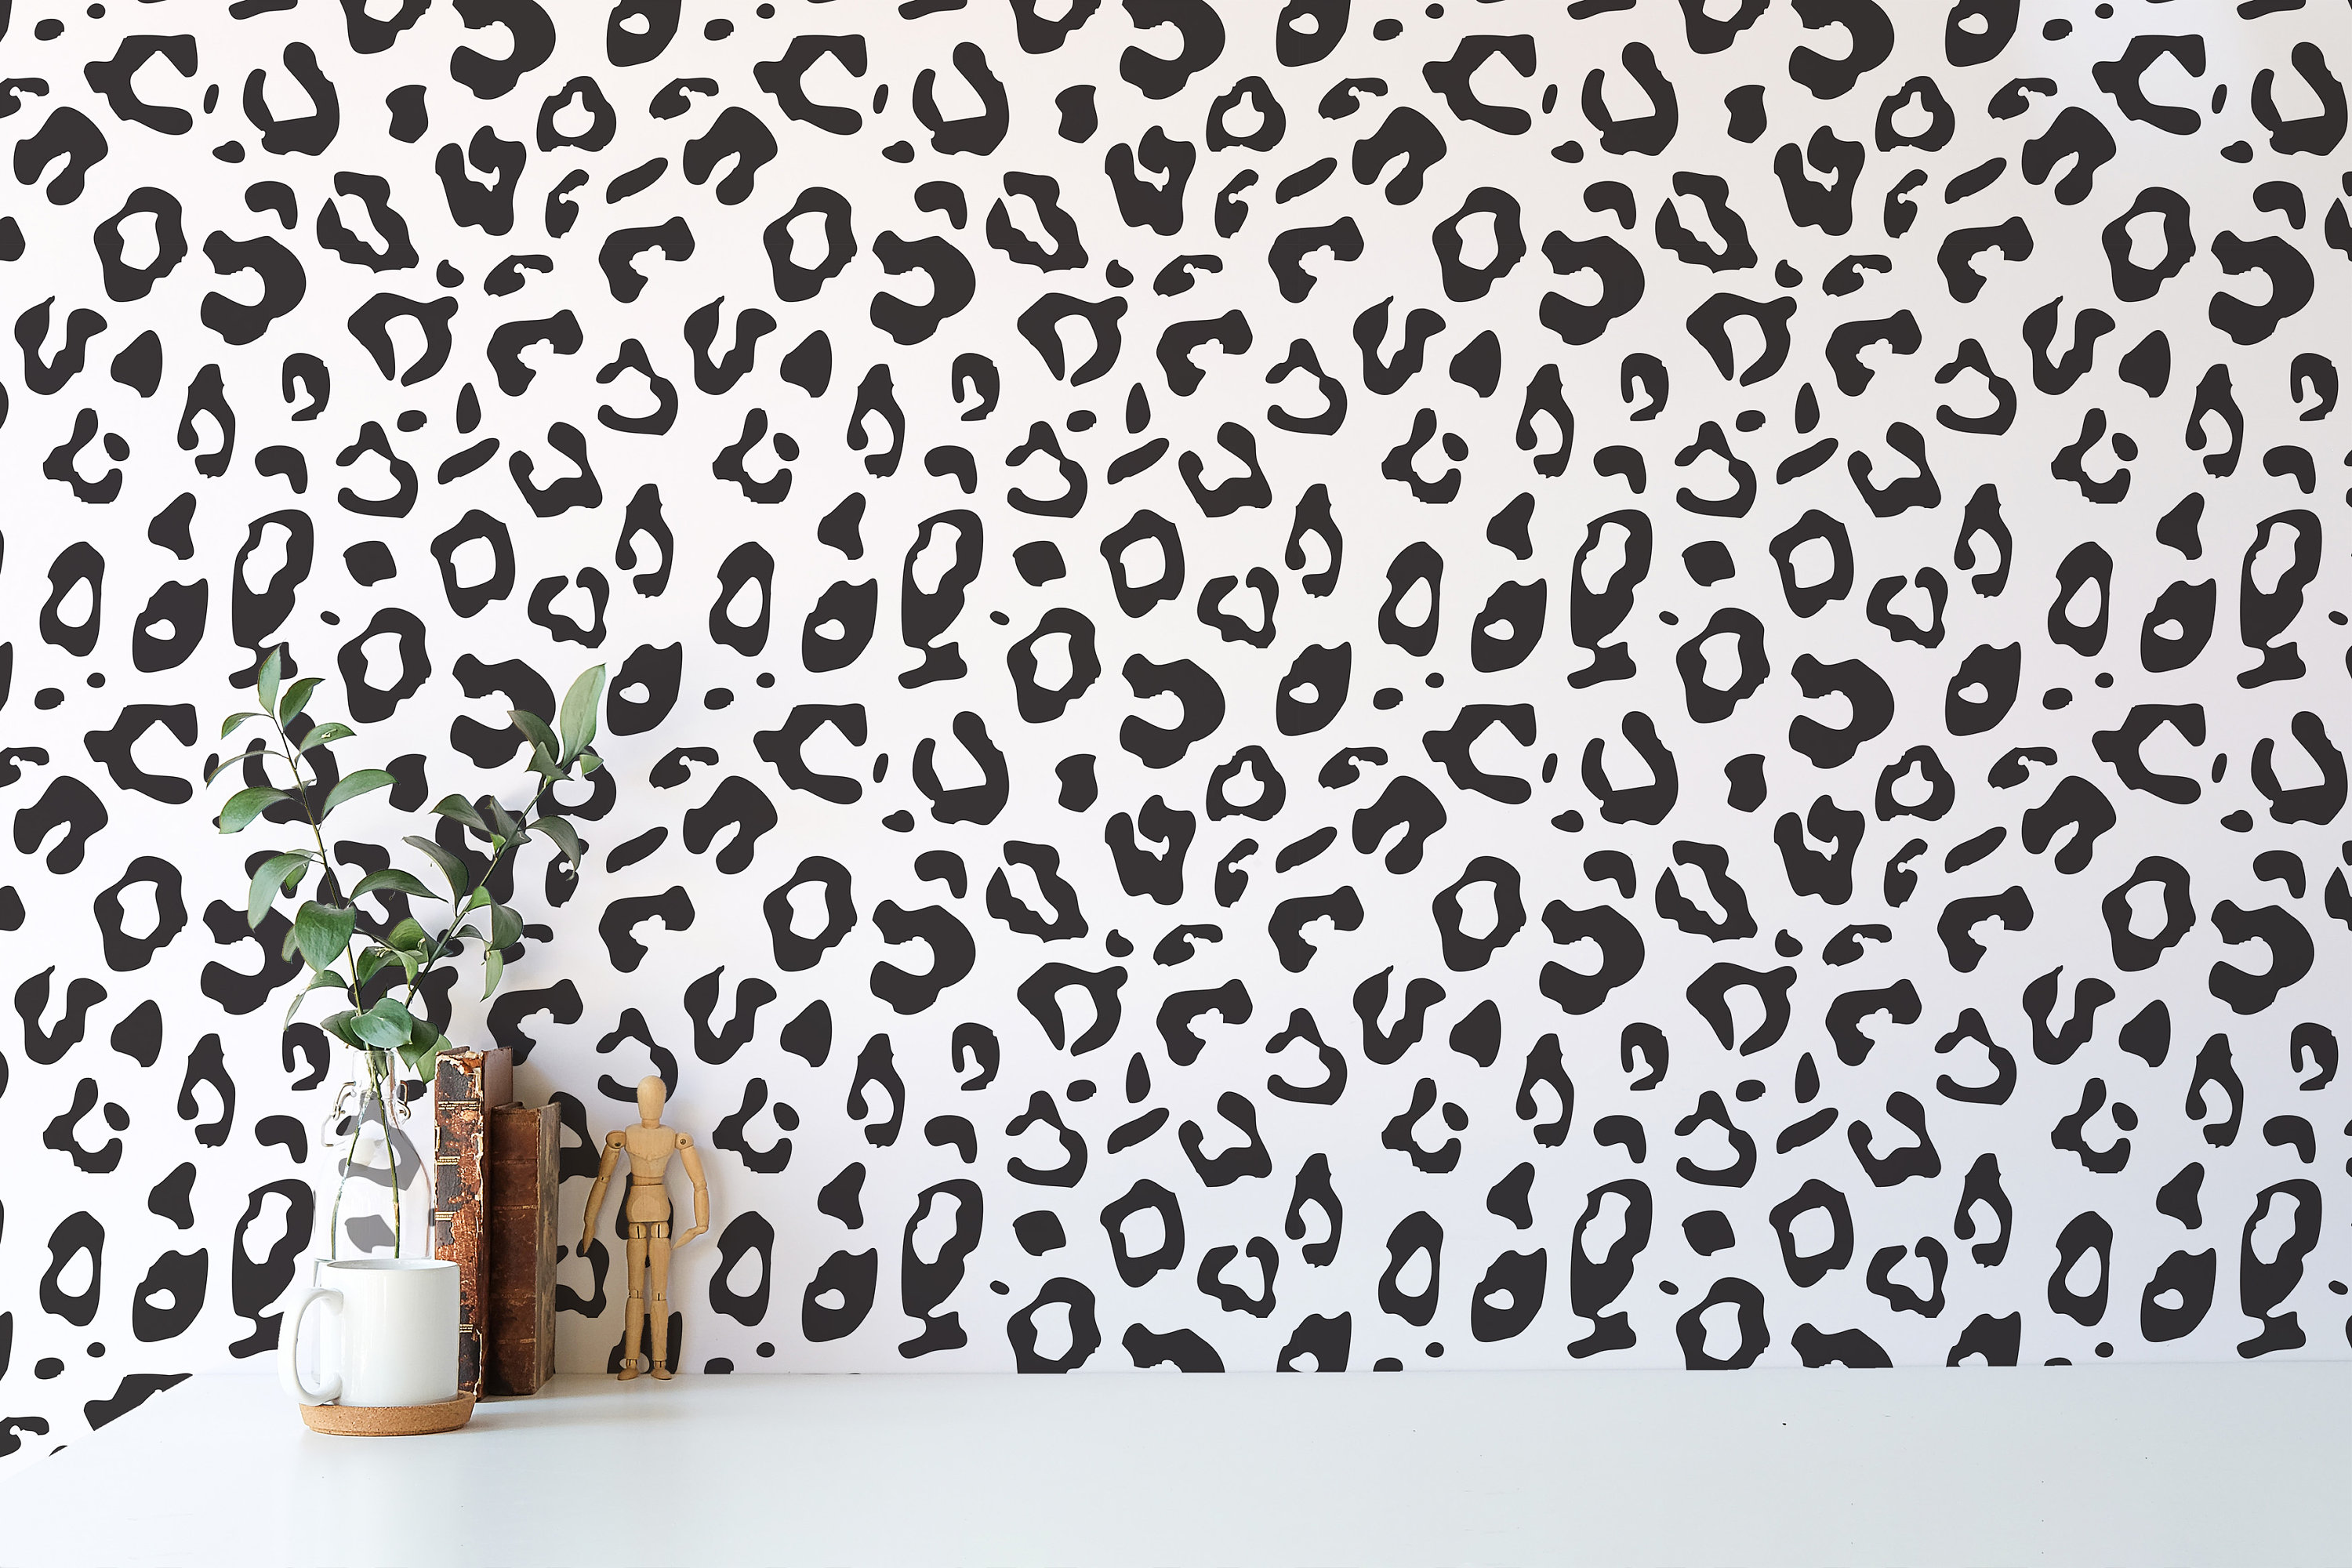 Leopard Spot Pattern Removable Wallpaper / Animal Print Peel